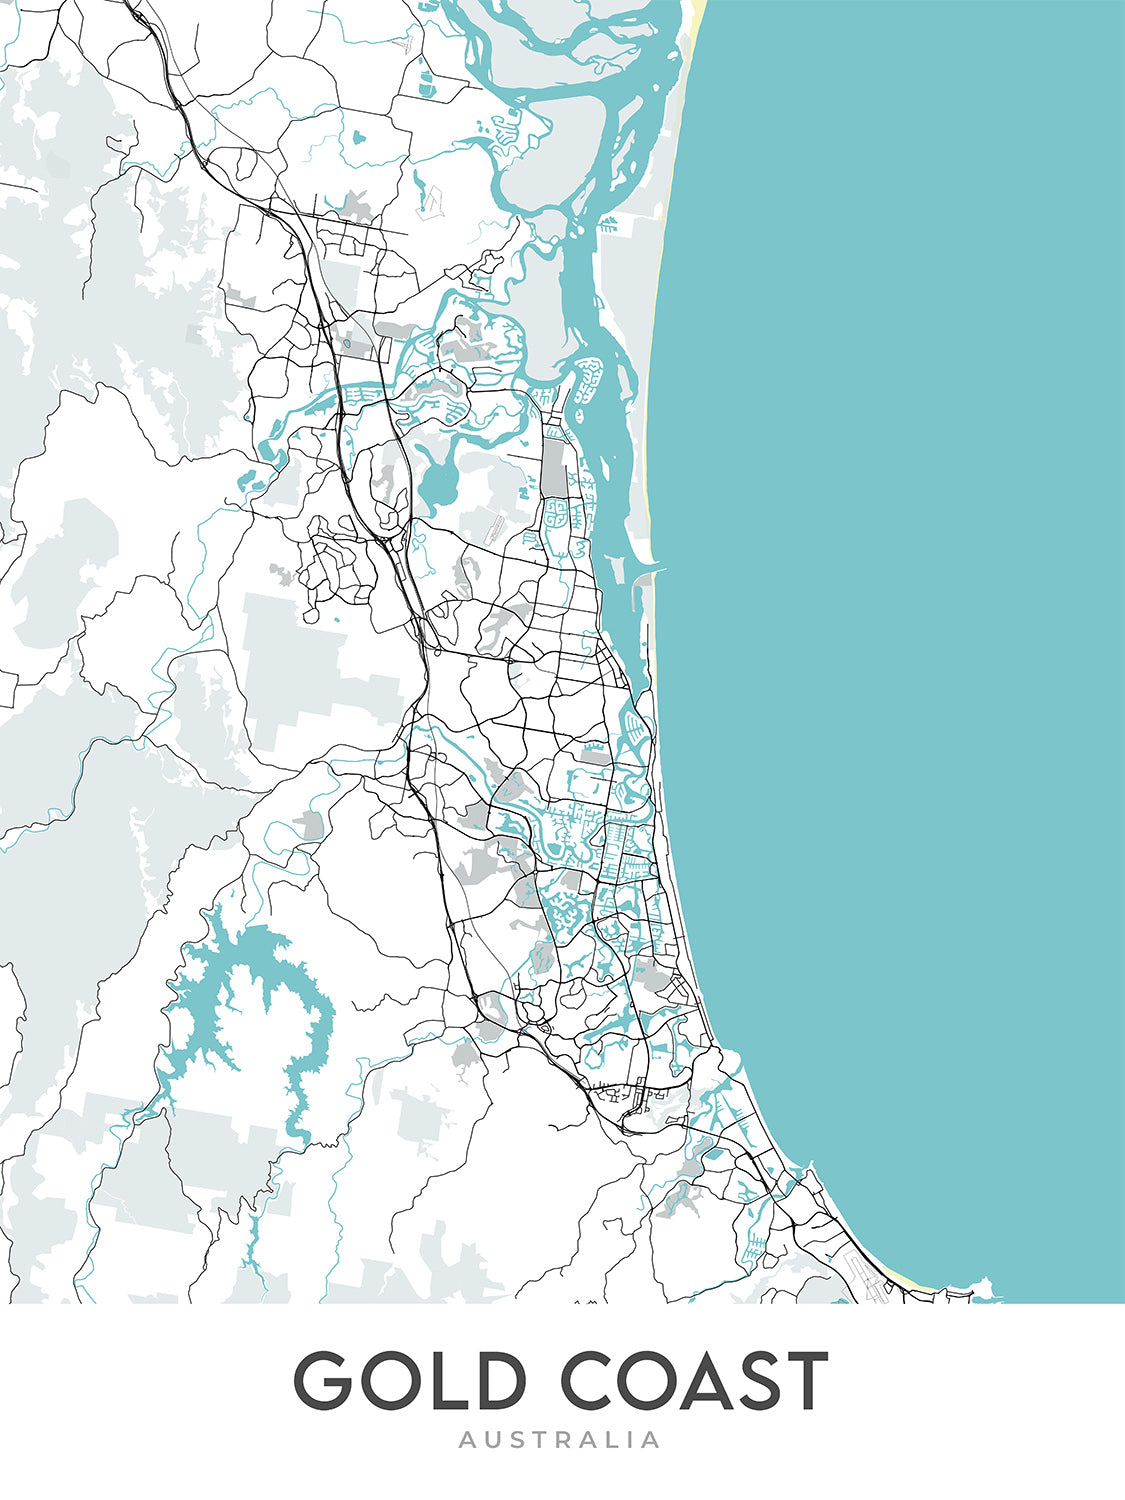 Modern City Map of Gold Coast, Australia: Surfers Paradise, Broadbeach, Sea World, Dreamworld, Pacific Motorway